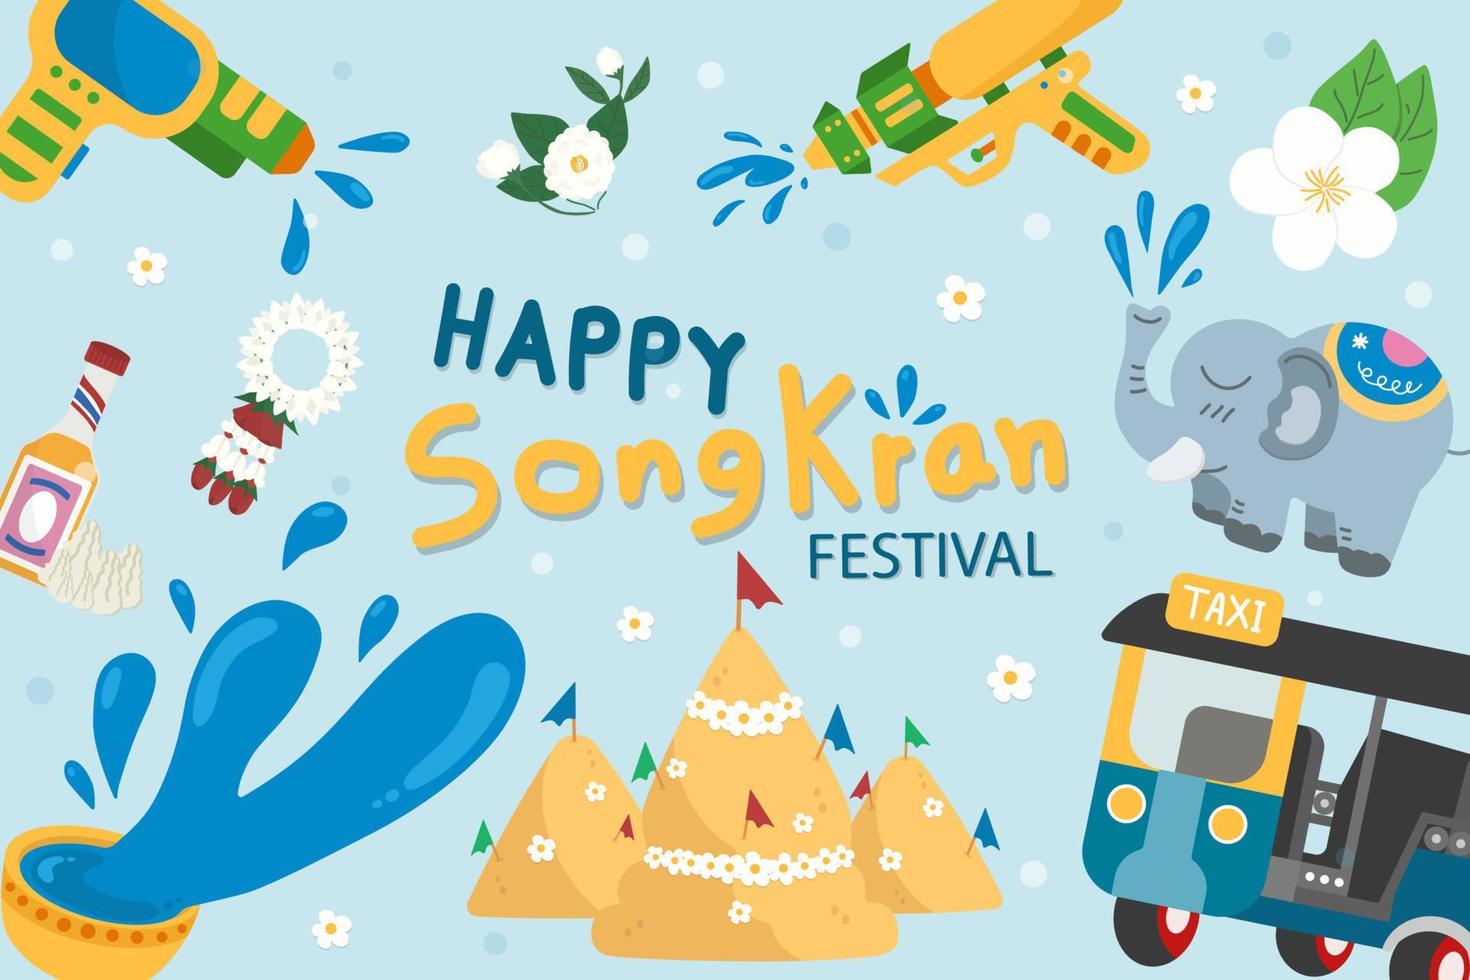 Songkran festival elementos. ilustración de Songkran festival antecedentes diseño por mano dibujado. vector